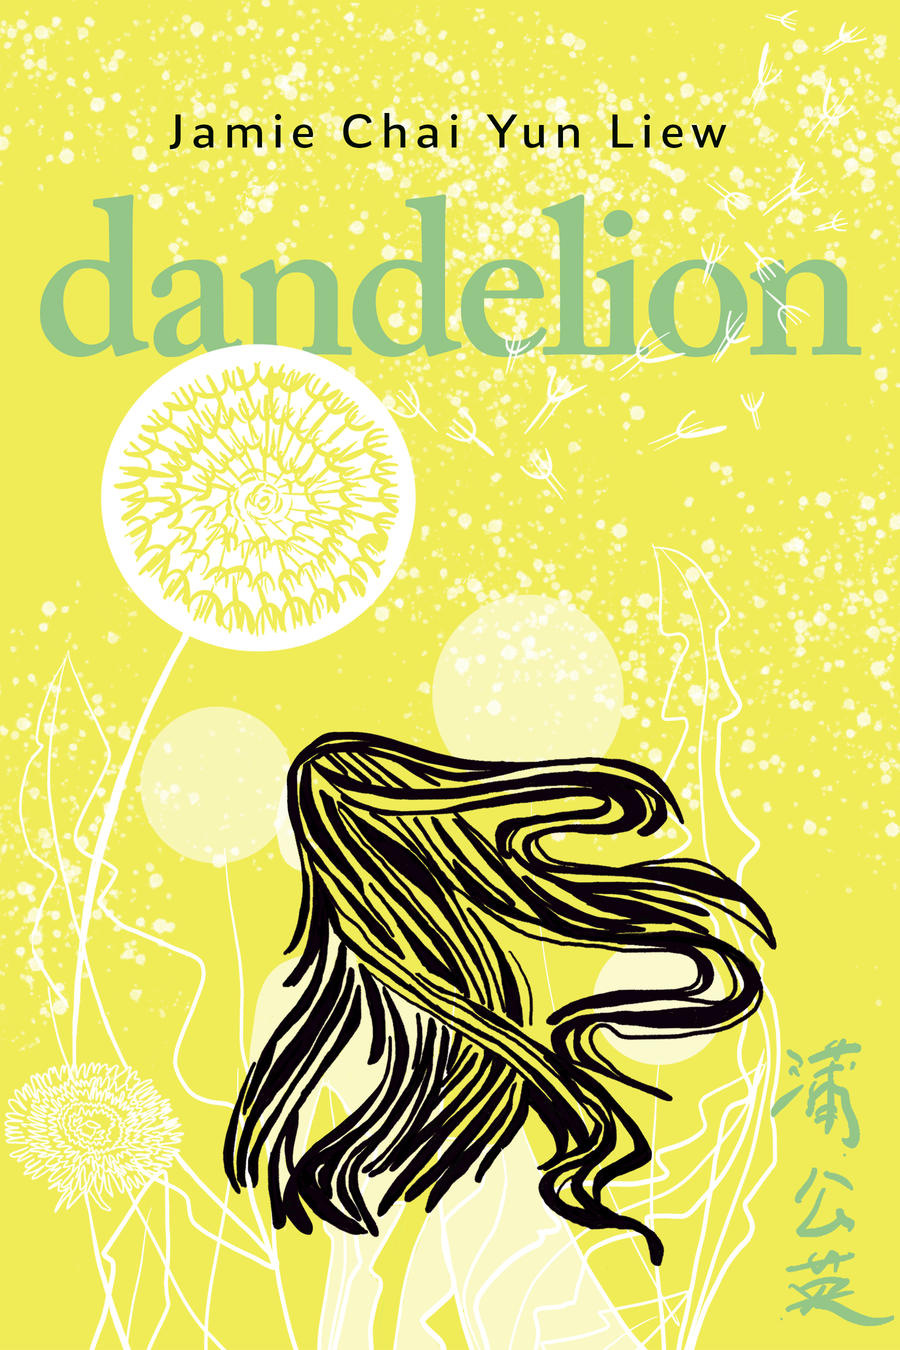 Jamie Chai Yun Liew's Dandelion book cover